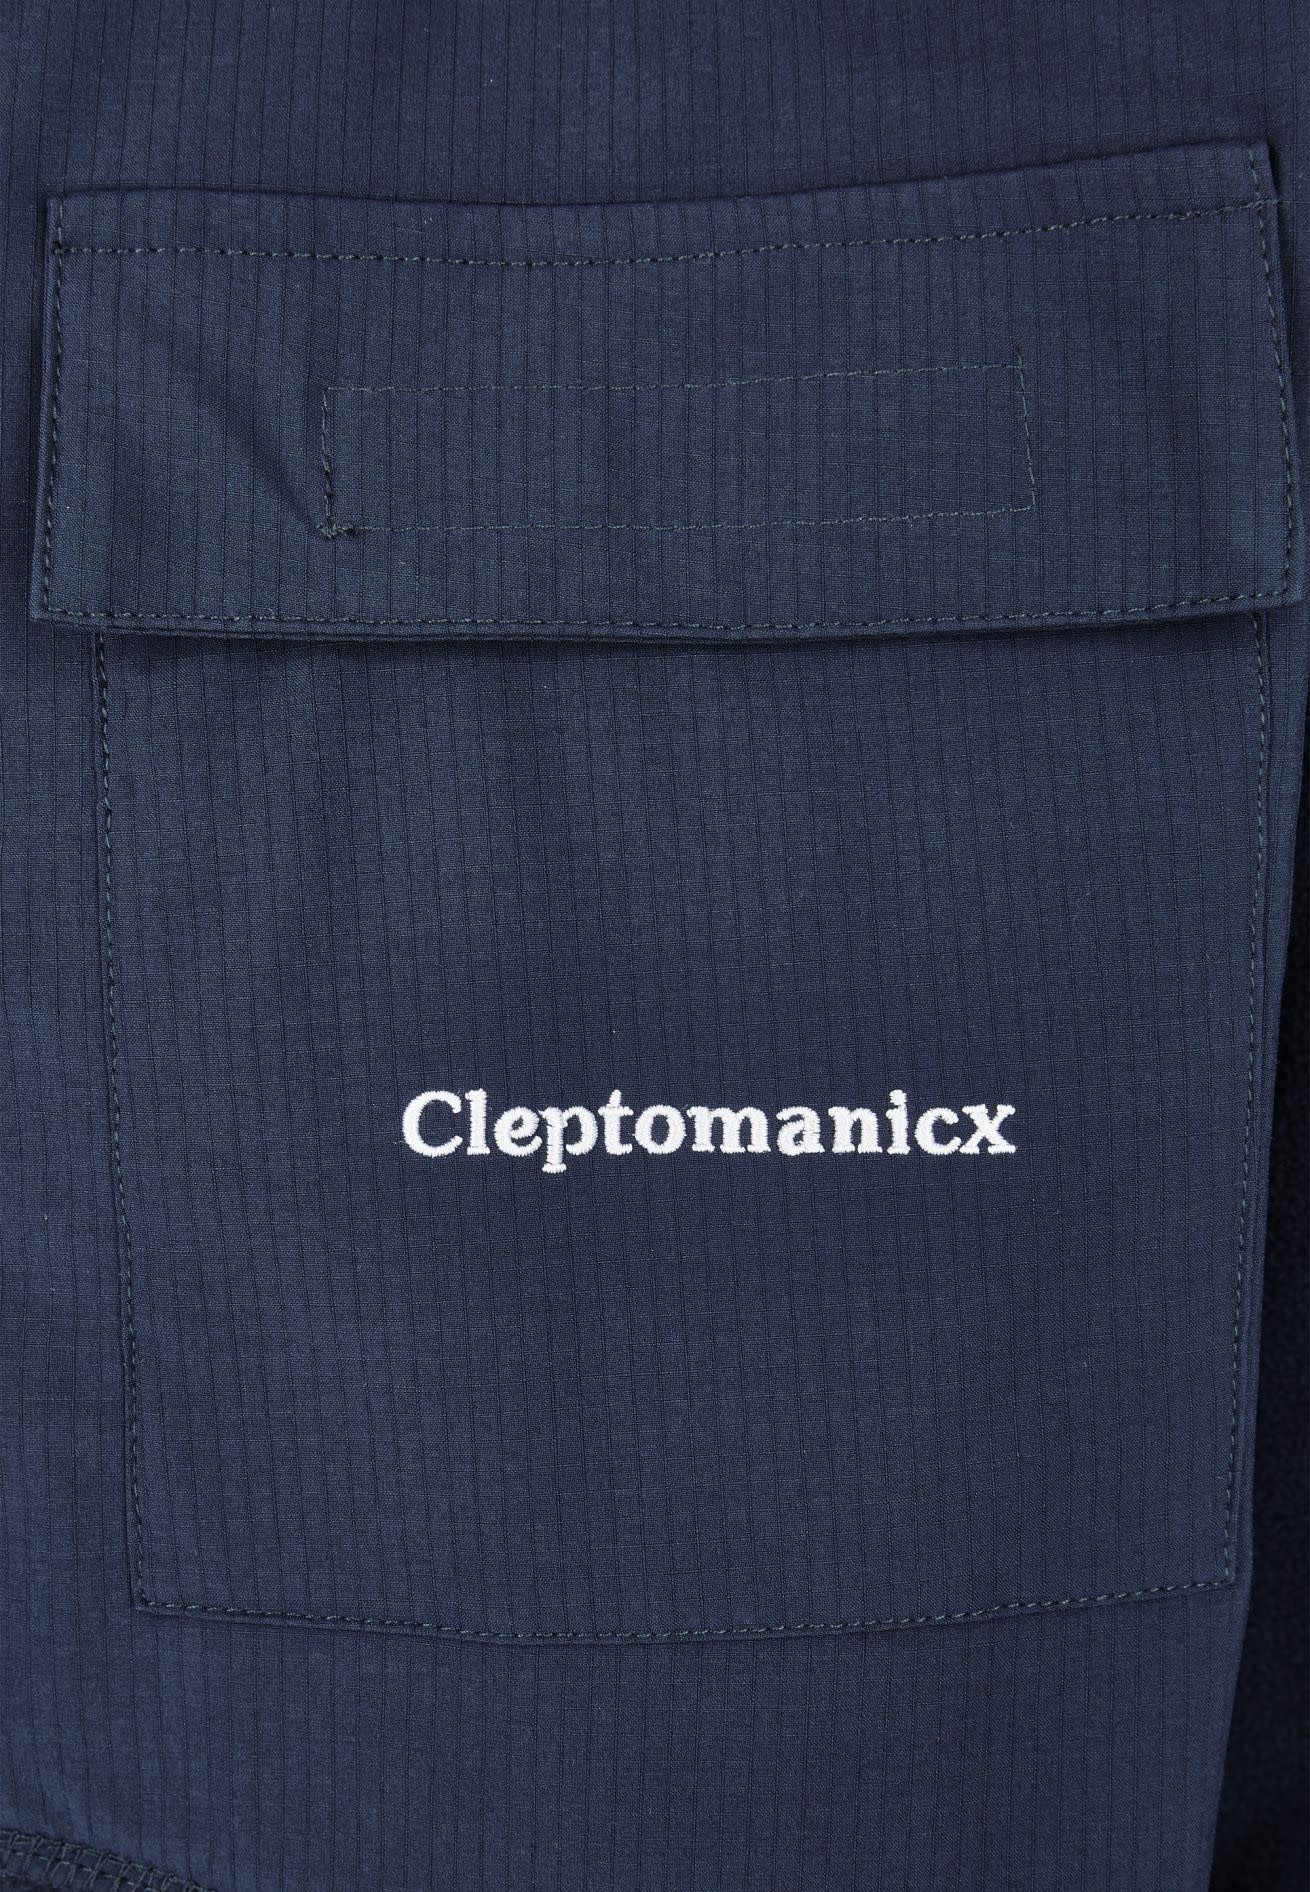 Cleptomanicx Cleptomanicx, Fisher Fleece Jacket, dark navy, S